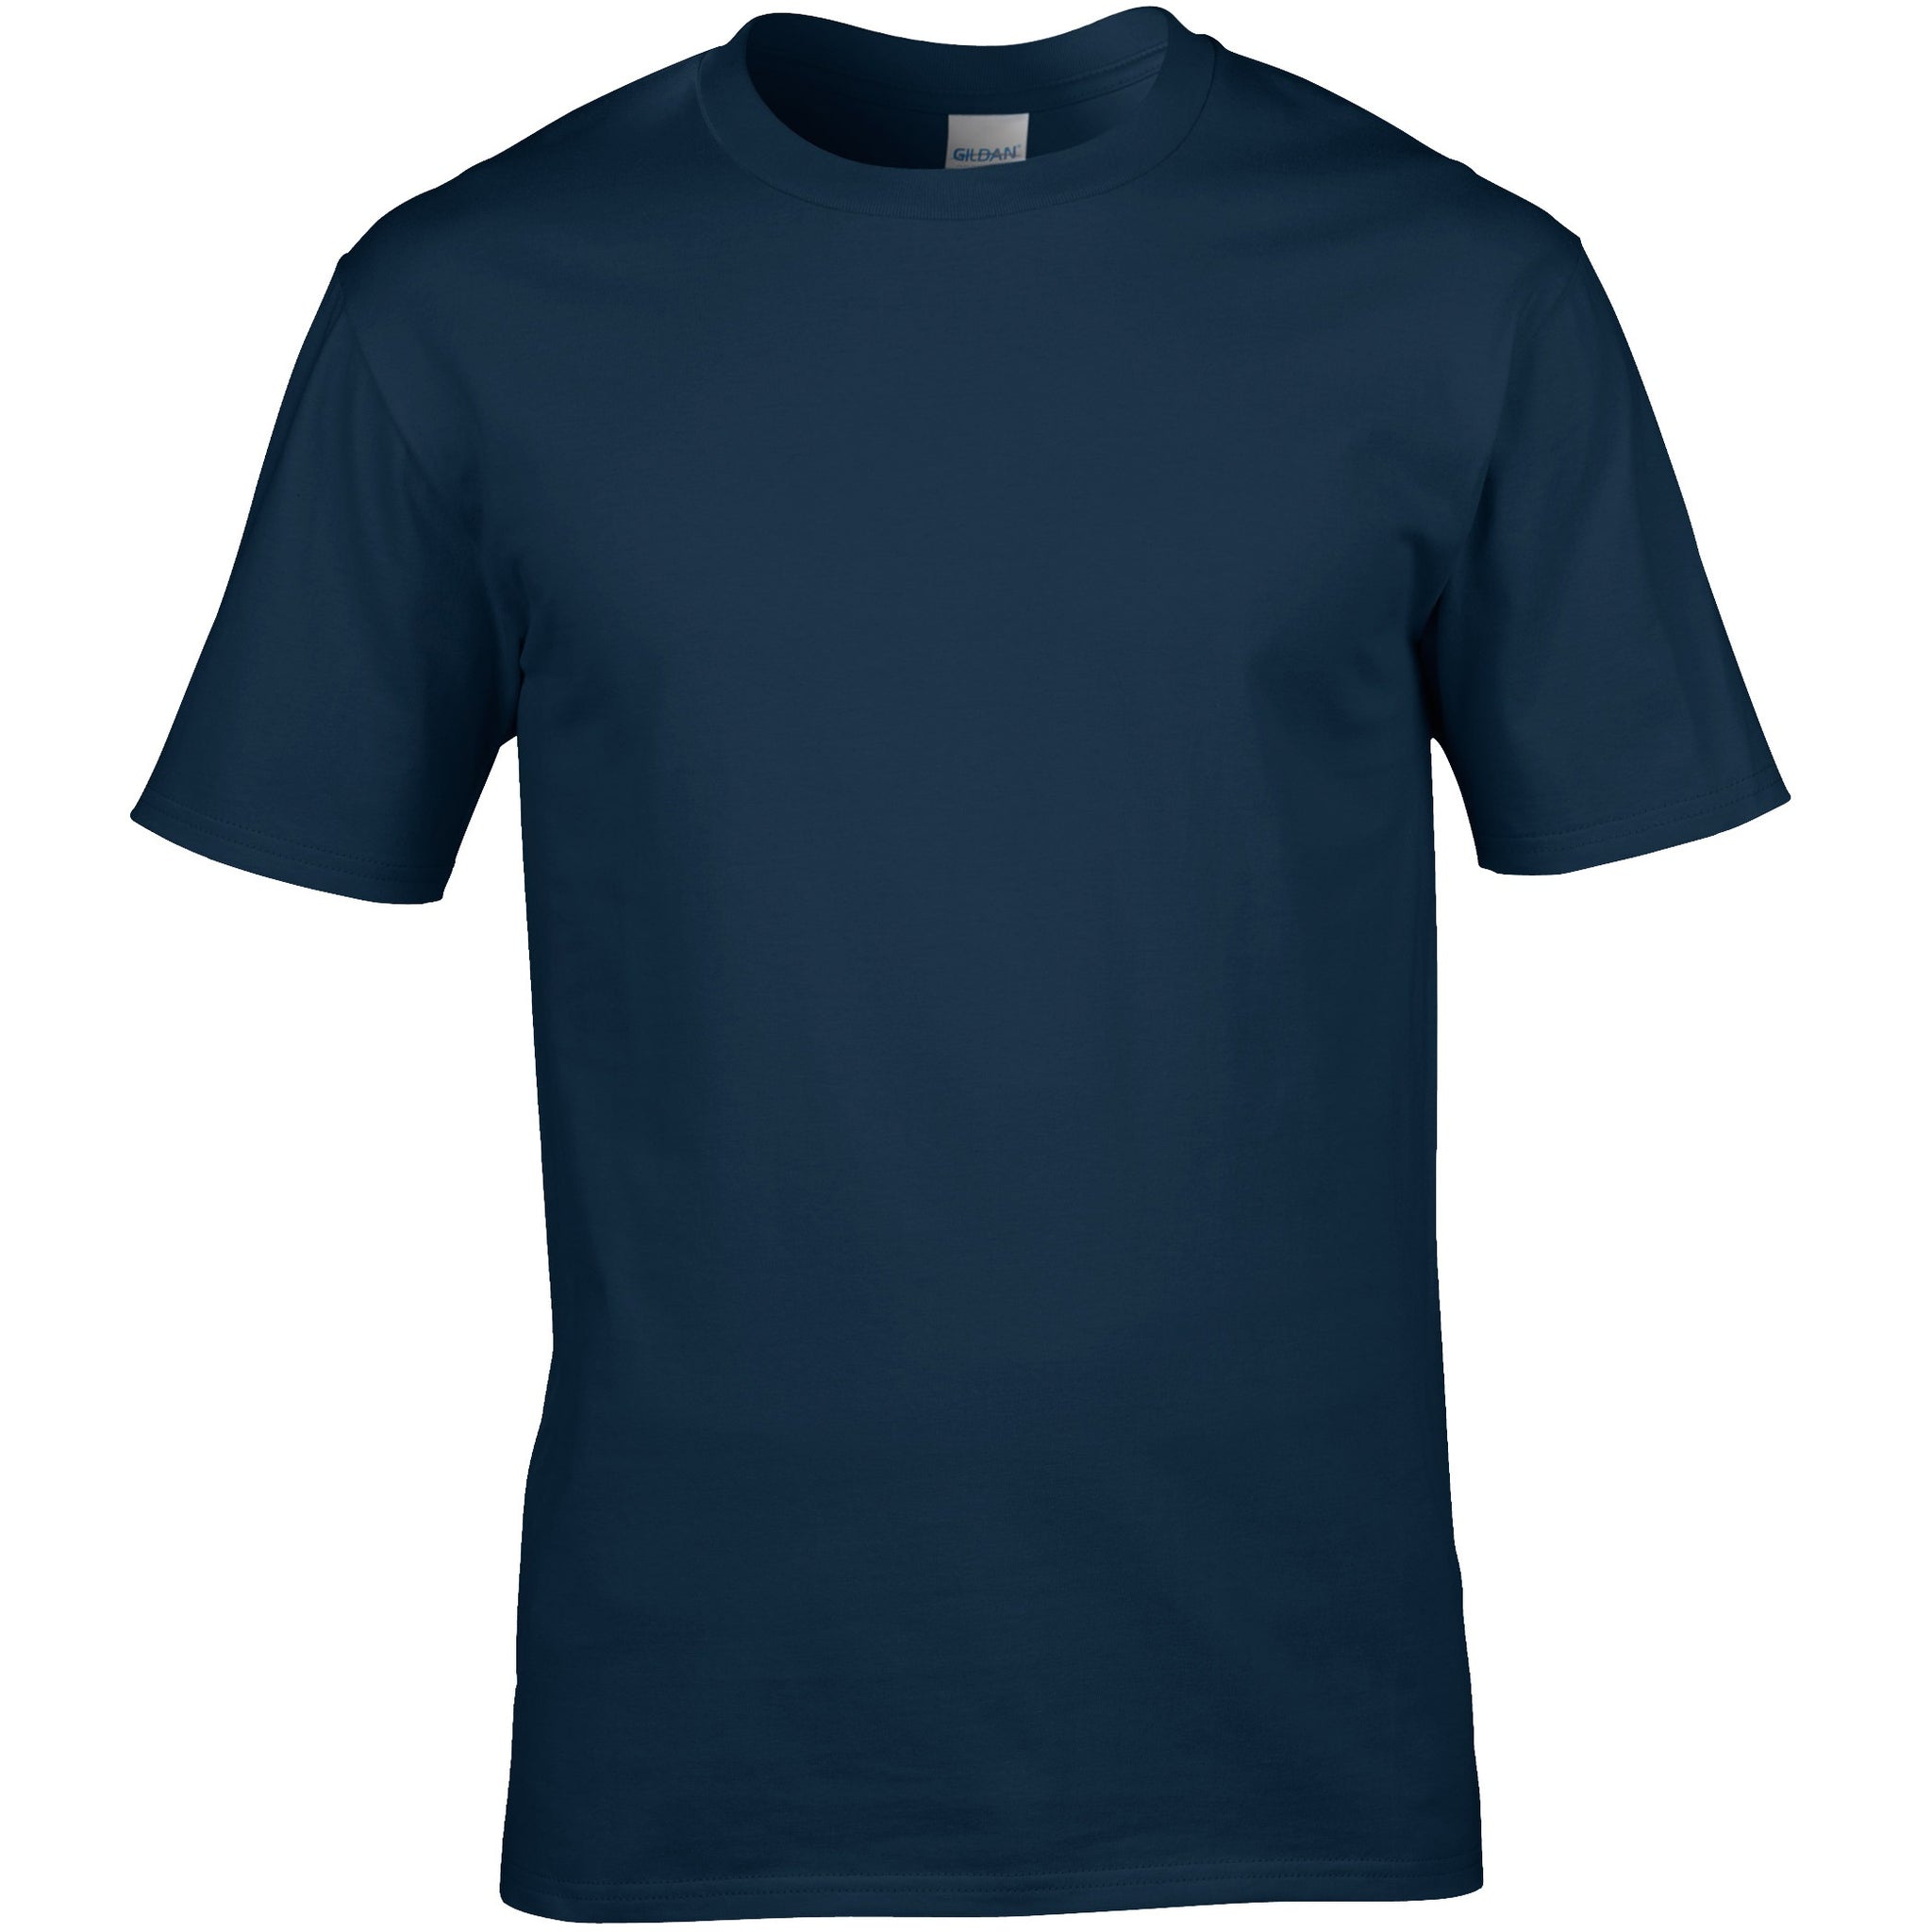 Medium Navy Cotton T shirt - choose logo